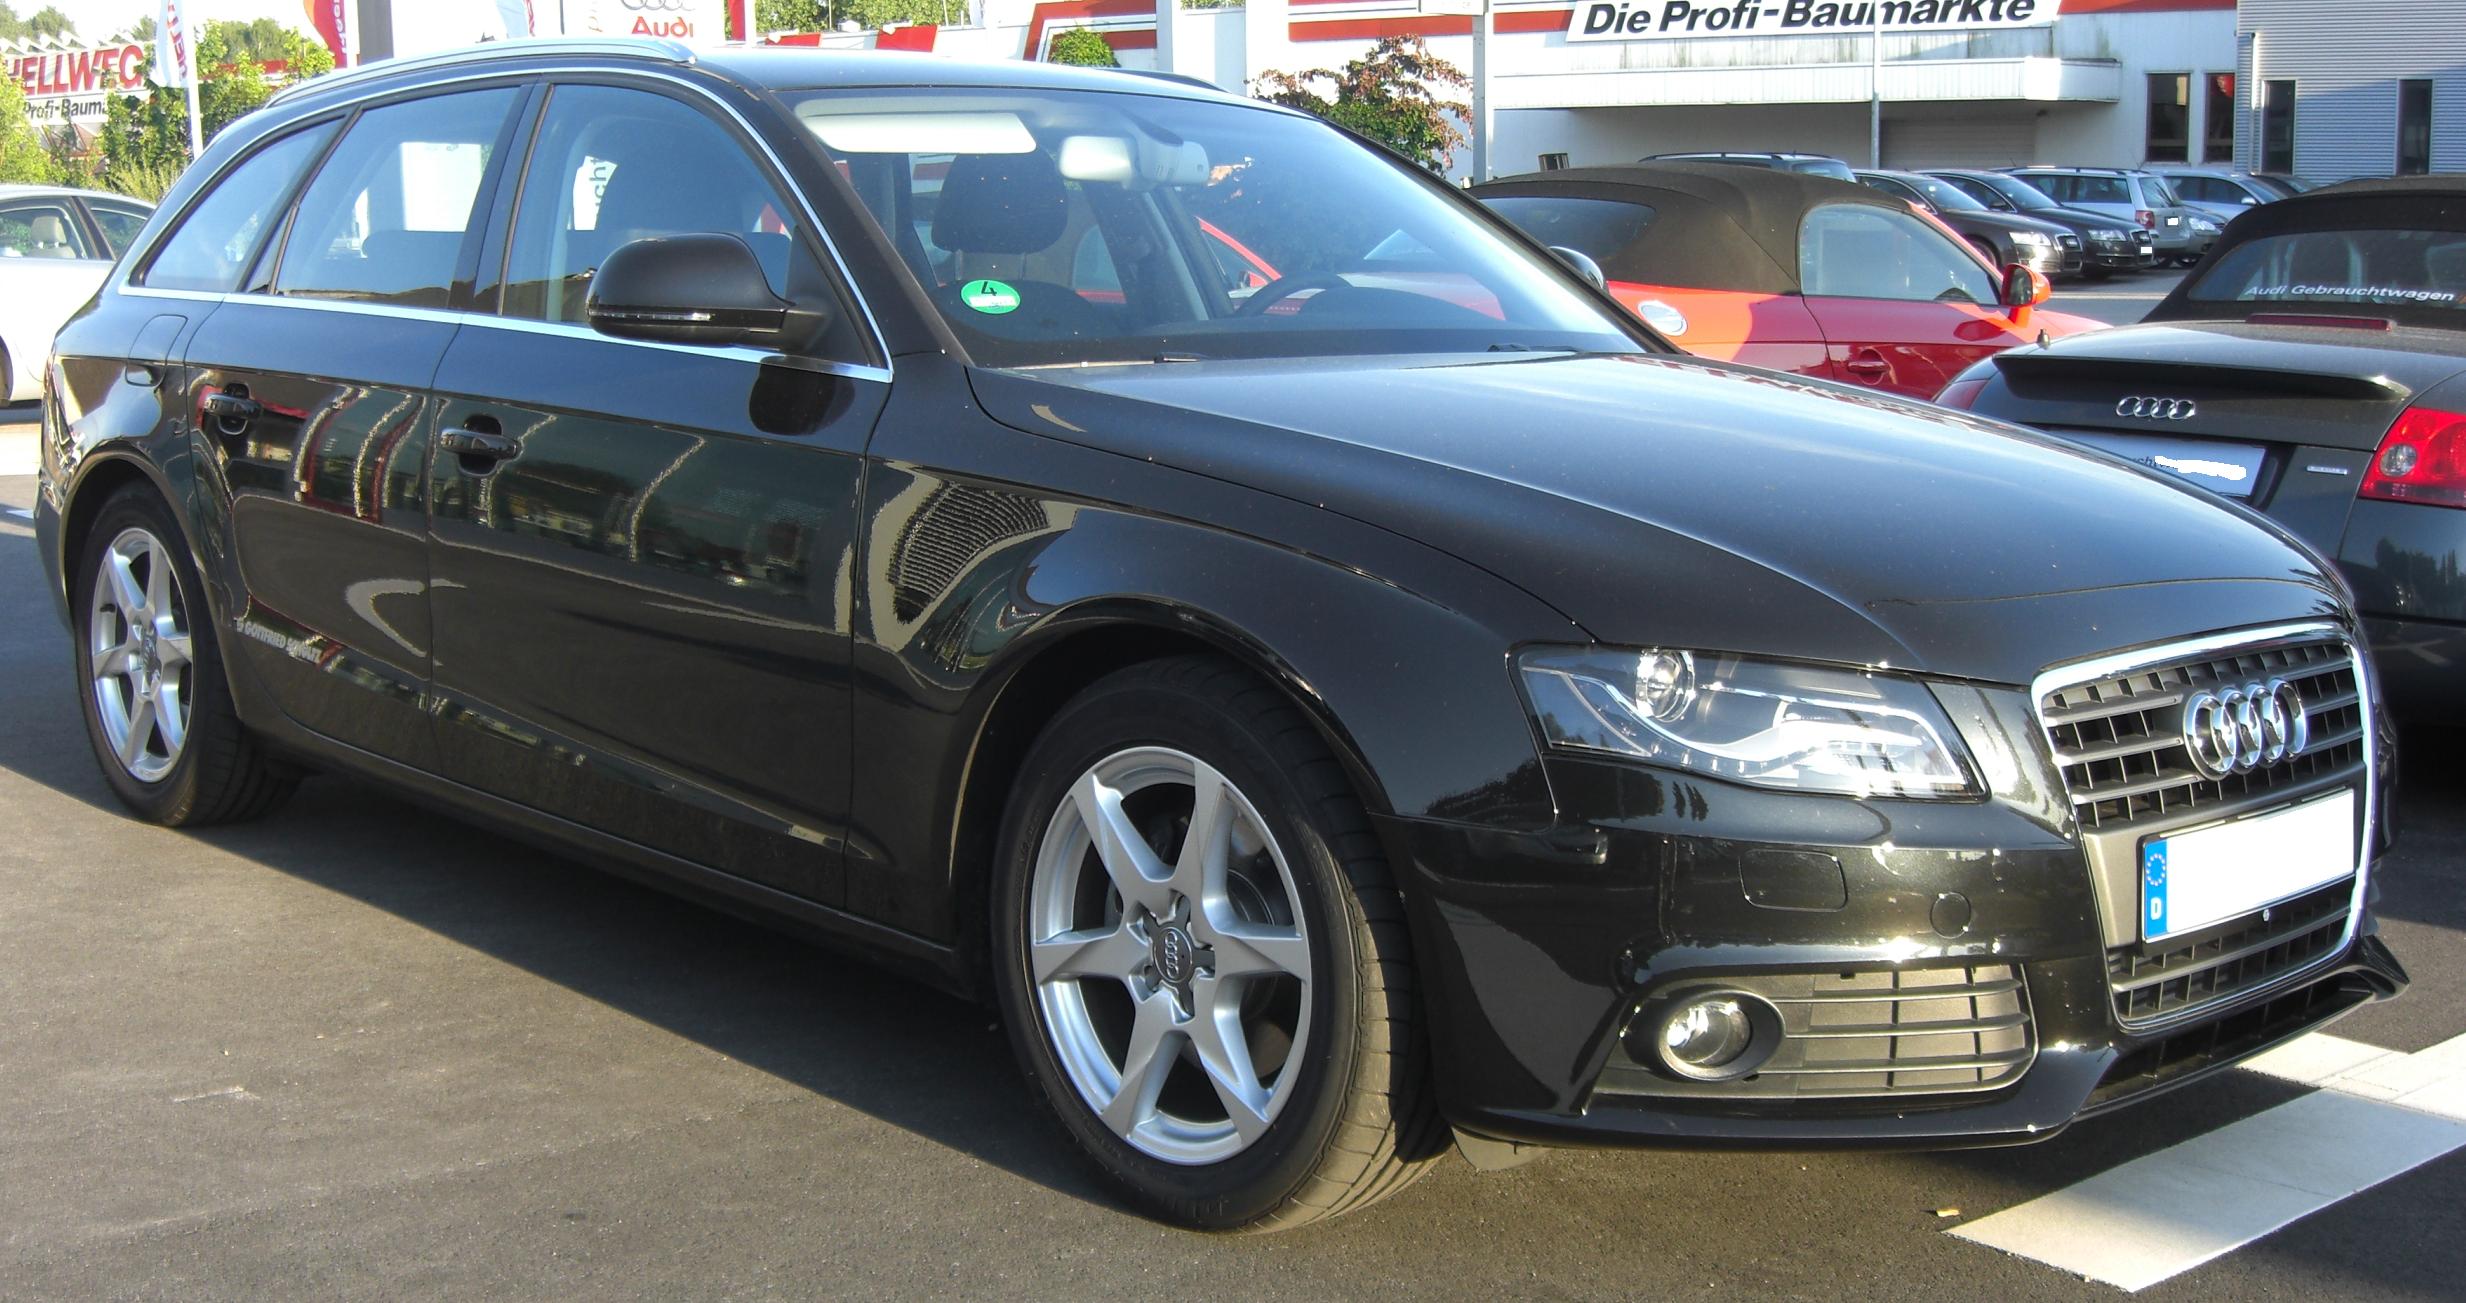 File:Audi A4 (B8) Avant front.jpg - Wikimedia Commons